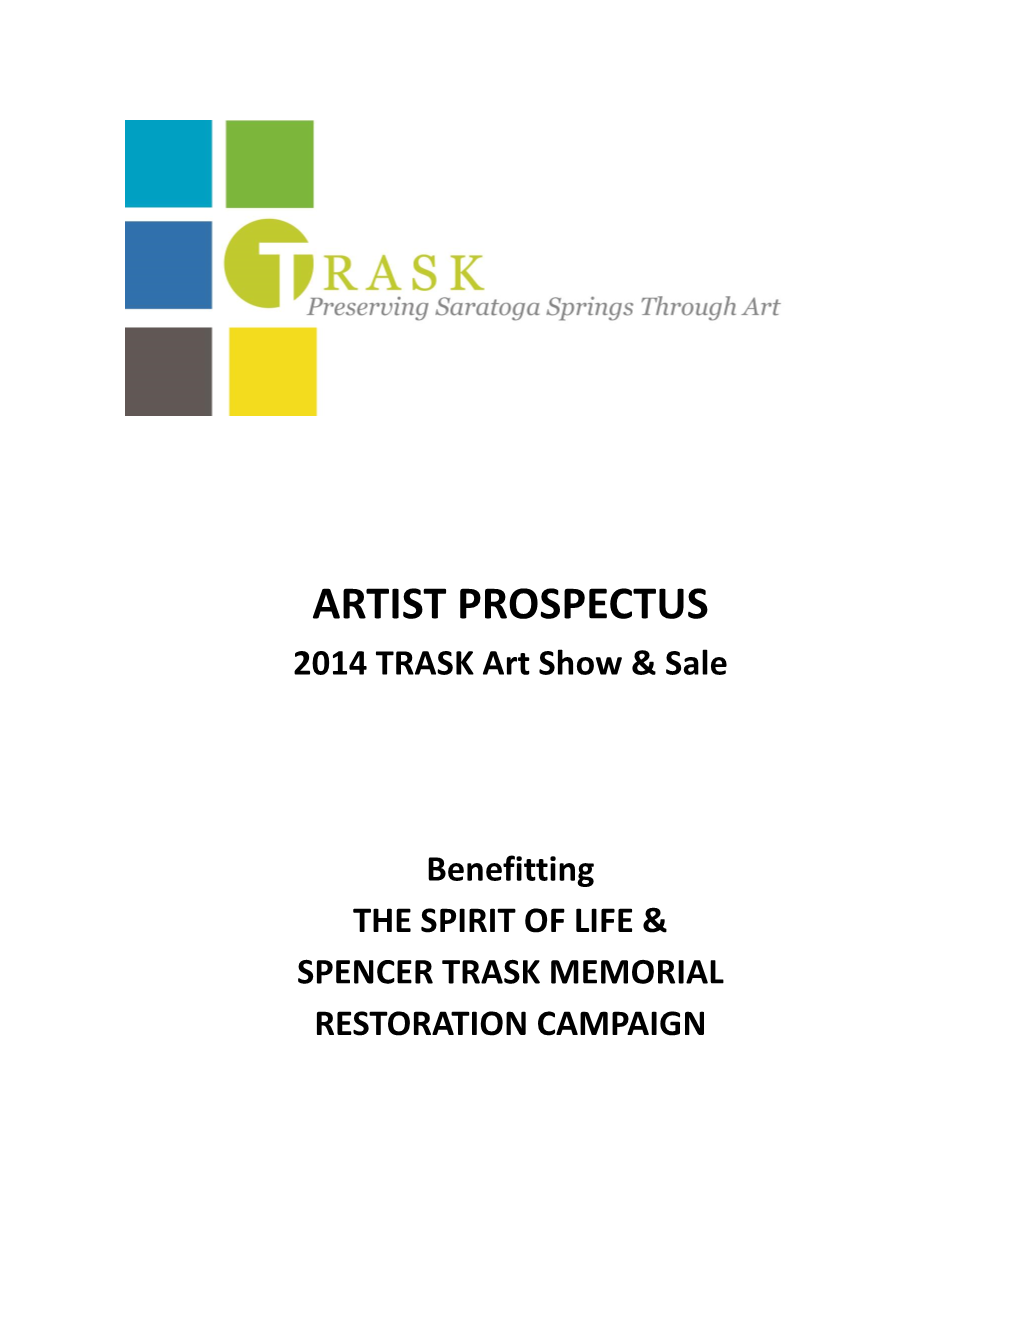 ARTIST PROSPECTUS 2014 TRASK Art Show & Sale